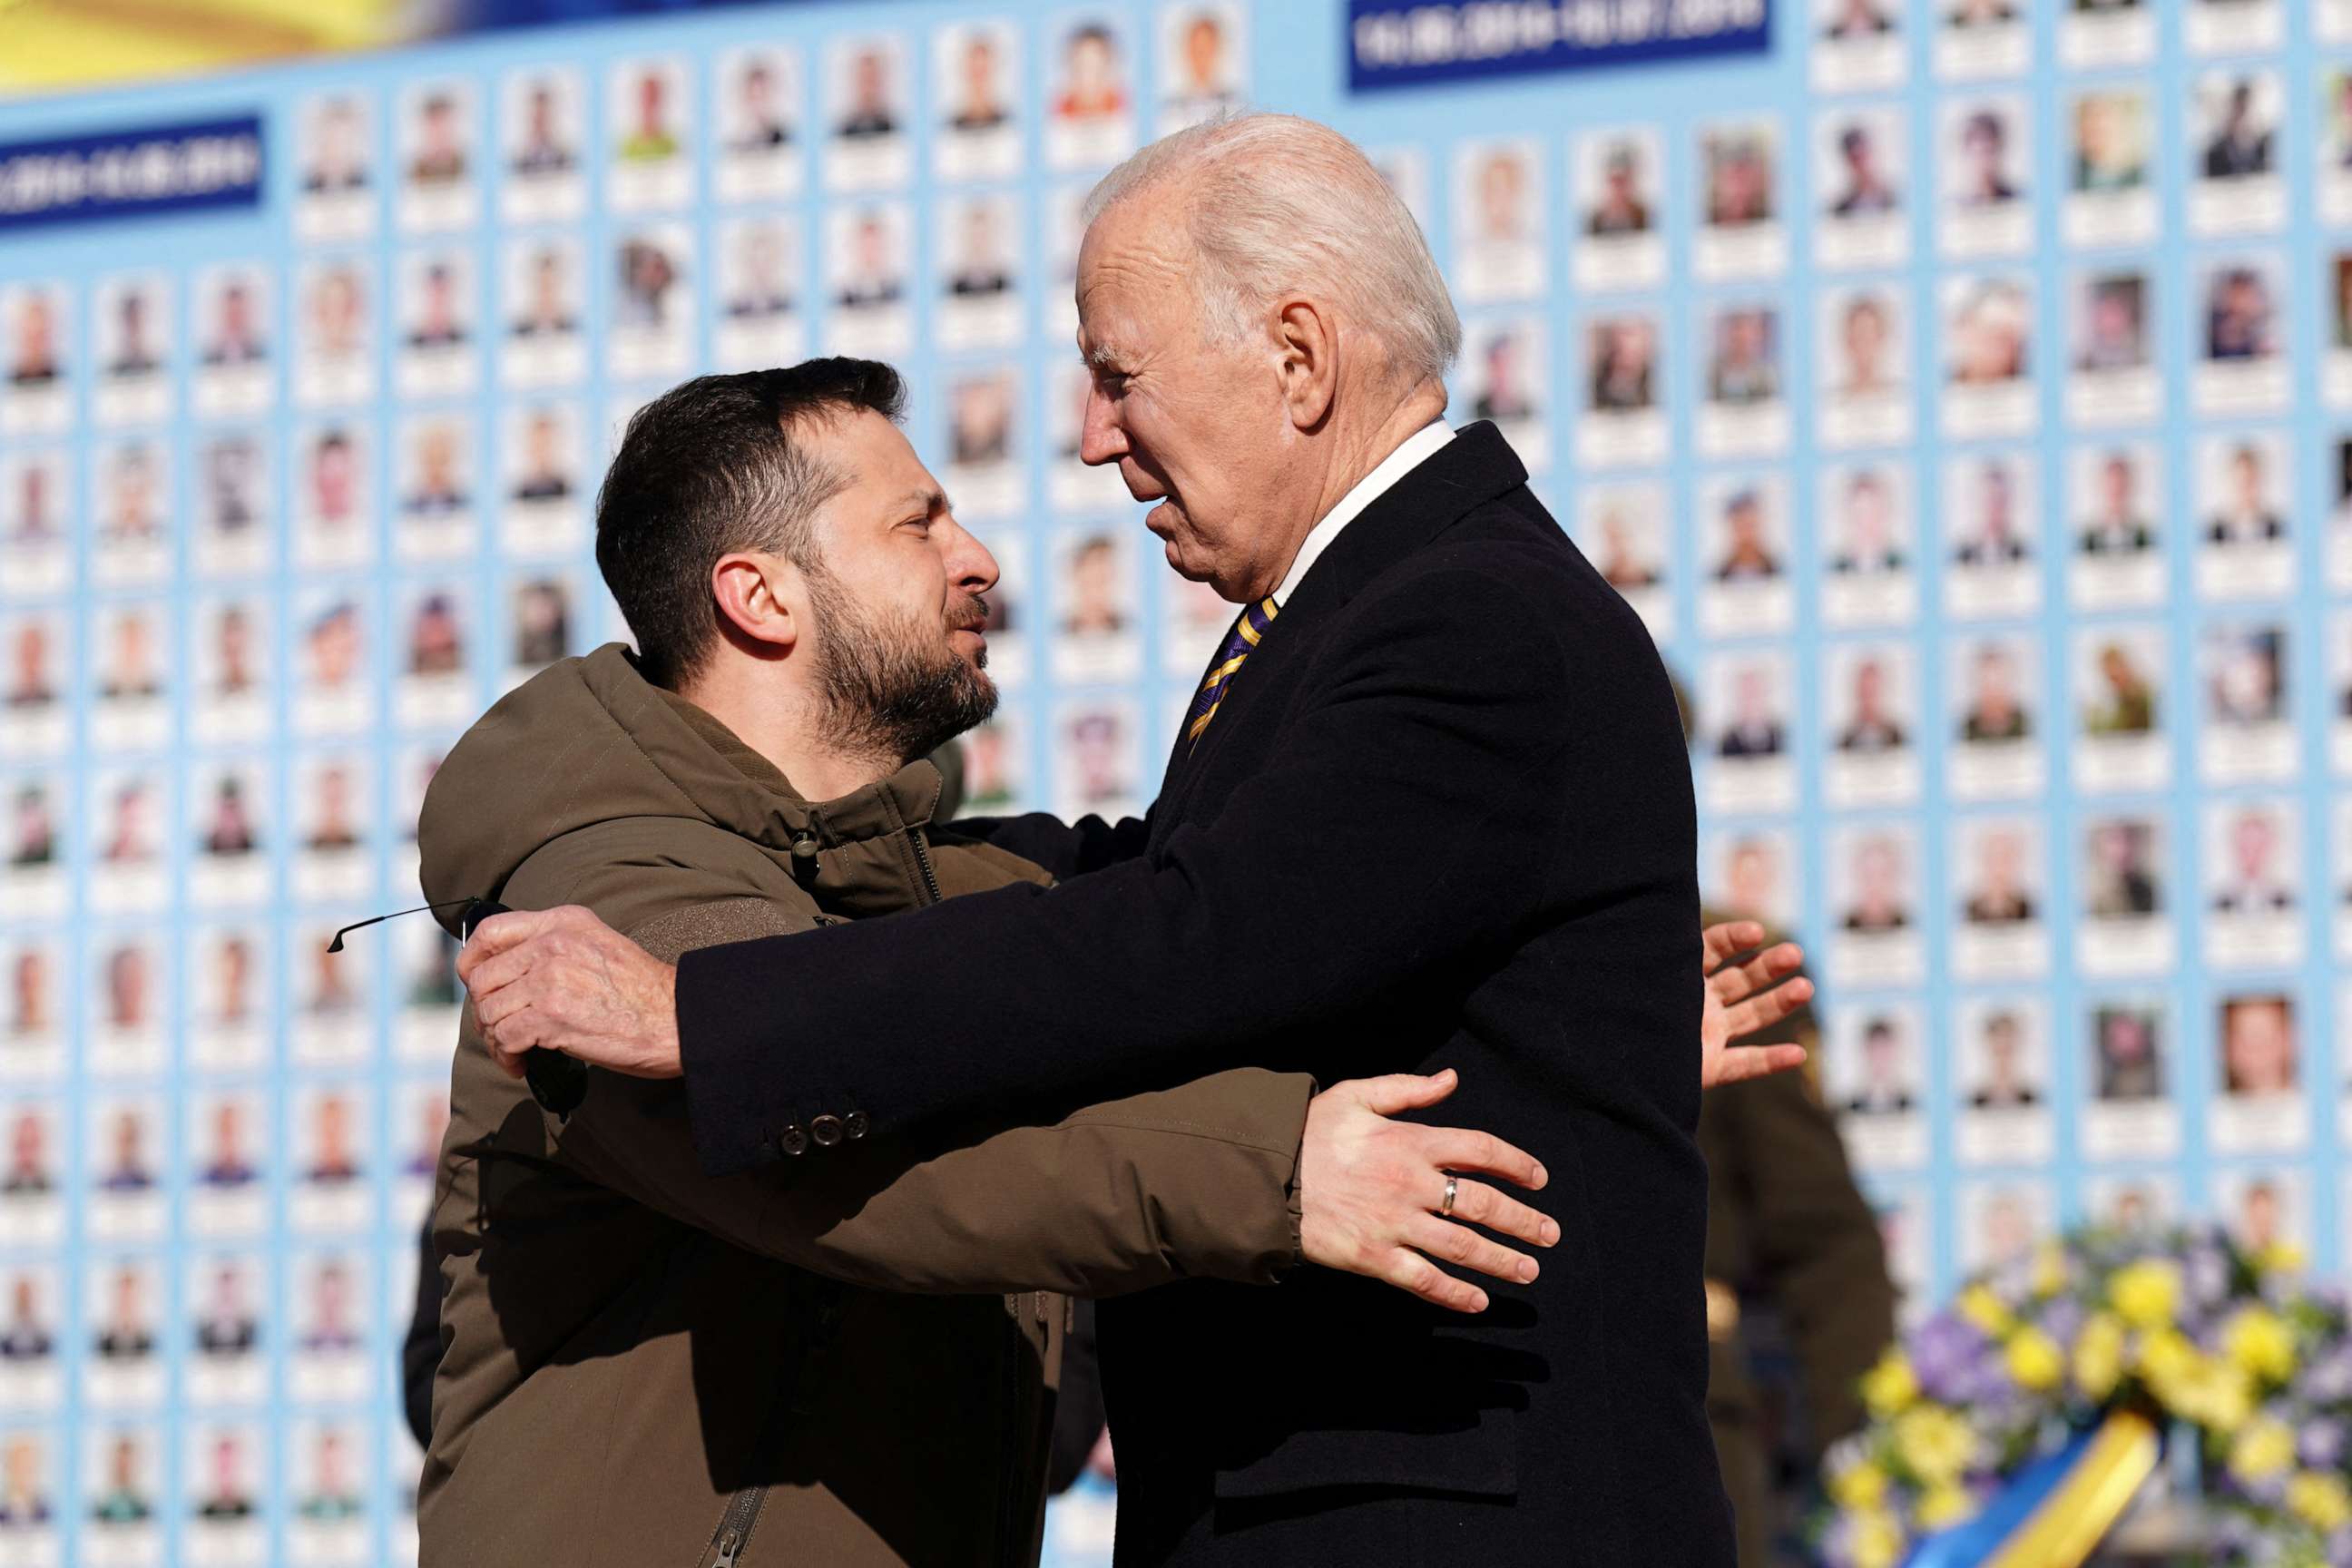 PHOTO: President Joe Biden is greeted by Ukrainian President Volodymyr Zelenskyy during a visit in Kyiv on Feb. 20, 2023.